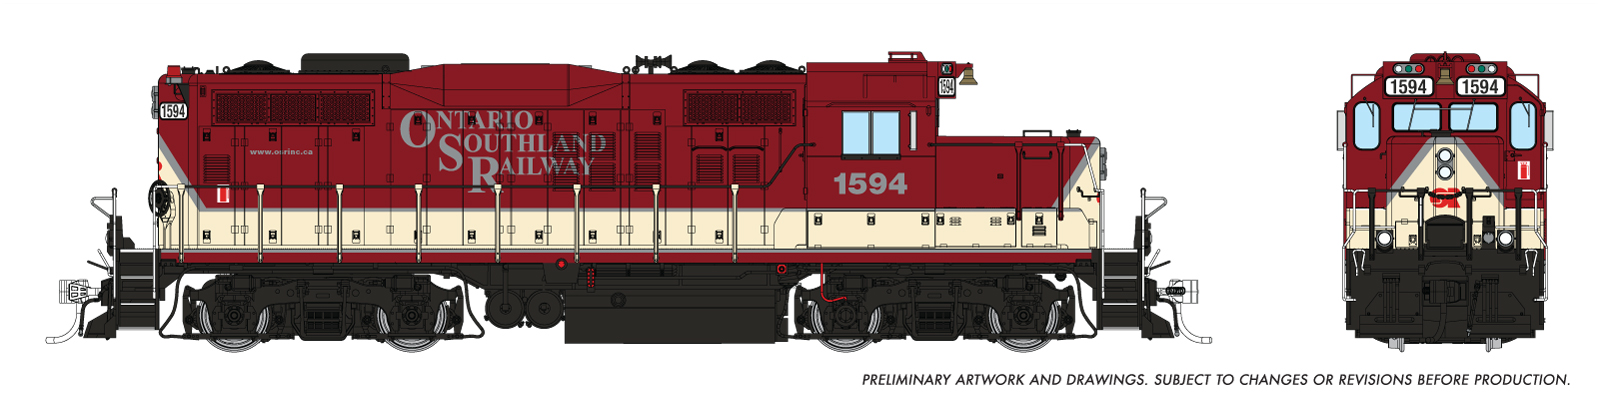 Rapido 54526 - HO GP9u - DC/DCC/Sound - Ontario Southland Railway #1594 - Otter Valley Railroad Exclusive